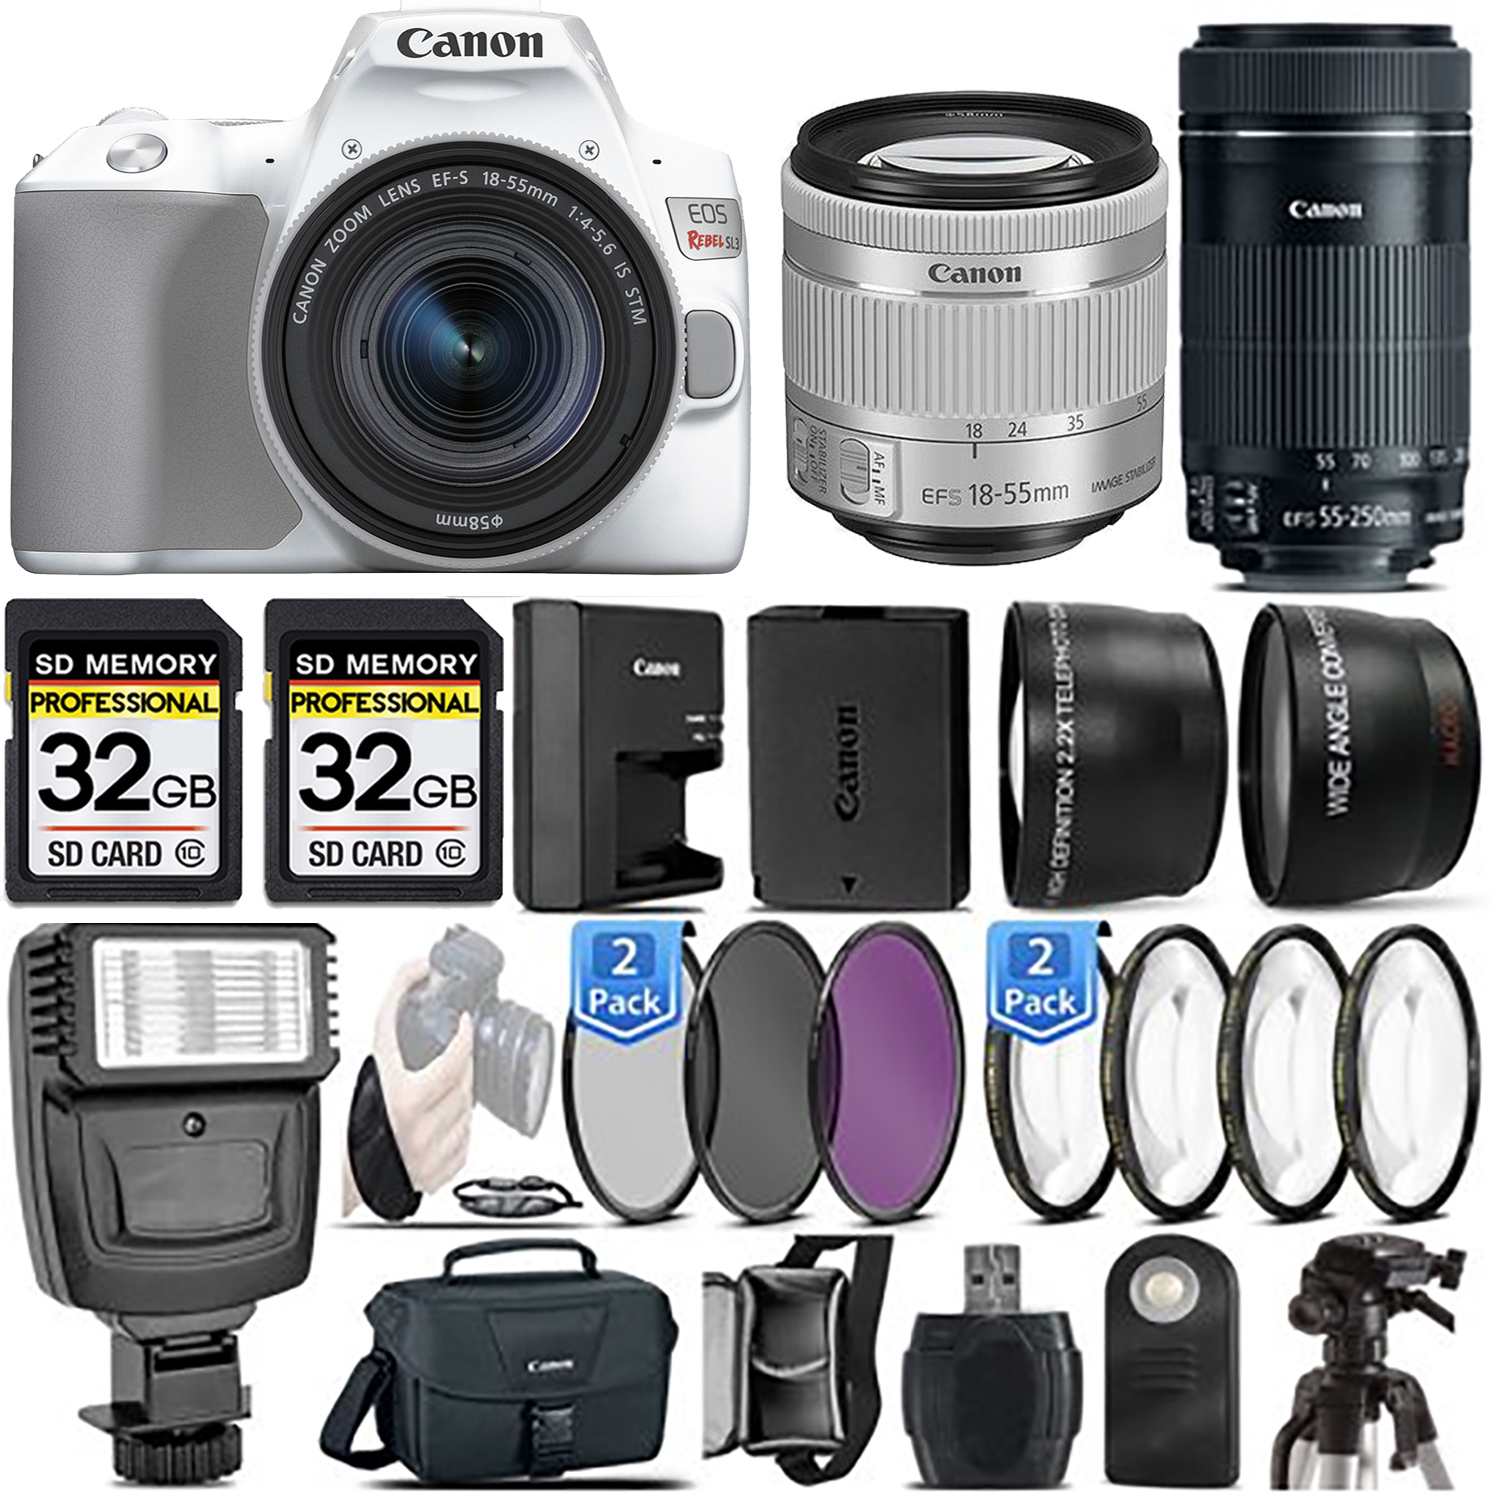 EOS Rebel SL3 DSLR Camera(White) + 18-55mm STM + 55-250mm STM - 64GB Kit *FREE SHIPPING*